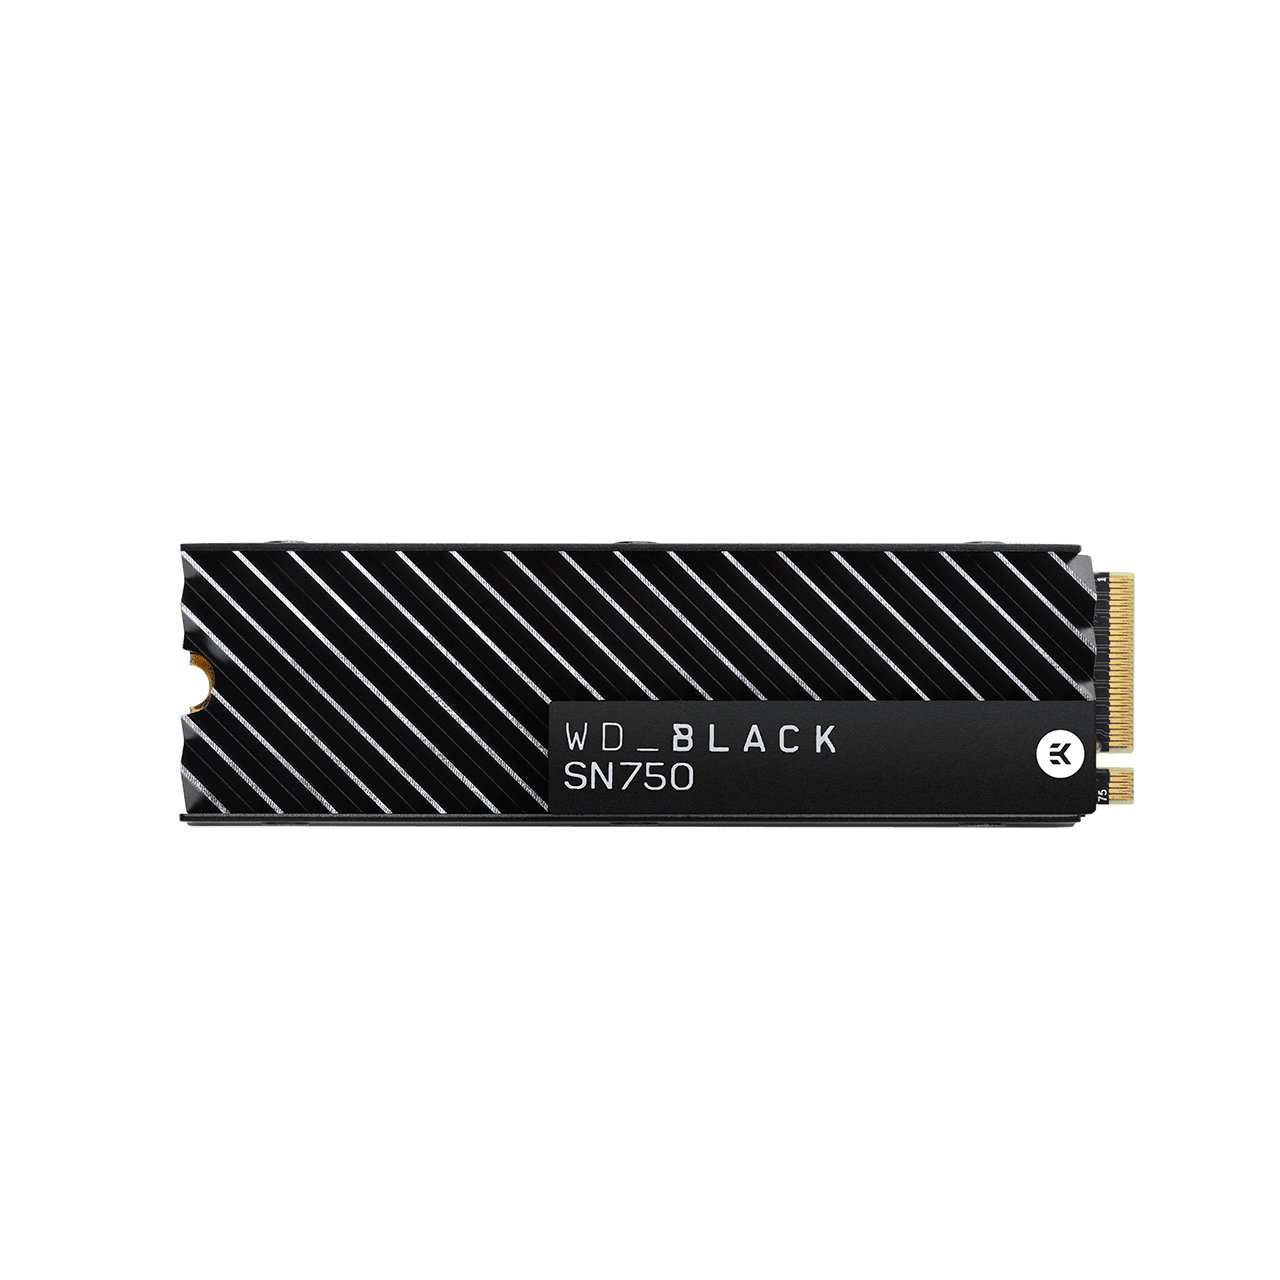 WD_BLACK SN750 NVMe SSD 500GB with Heatsink - Image2